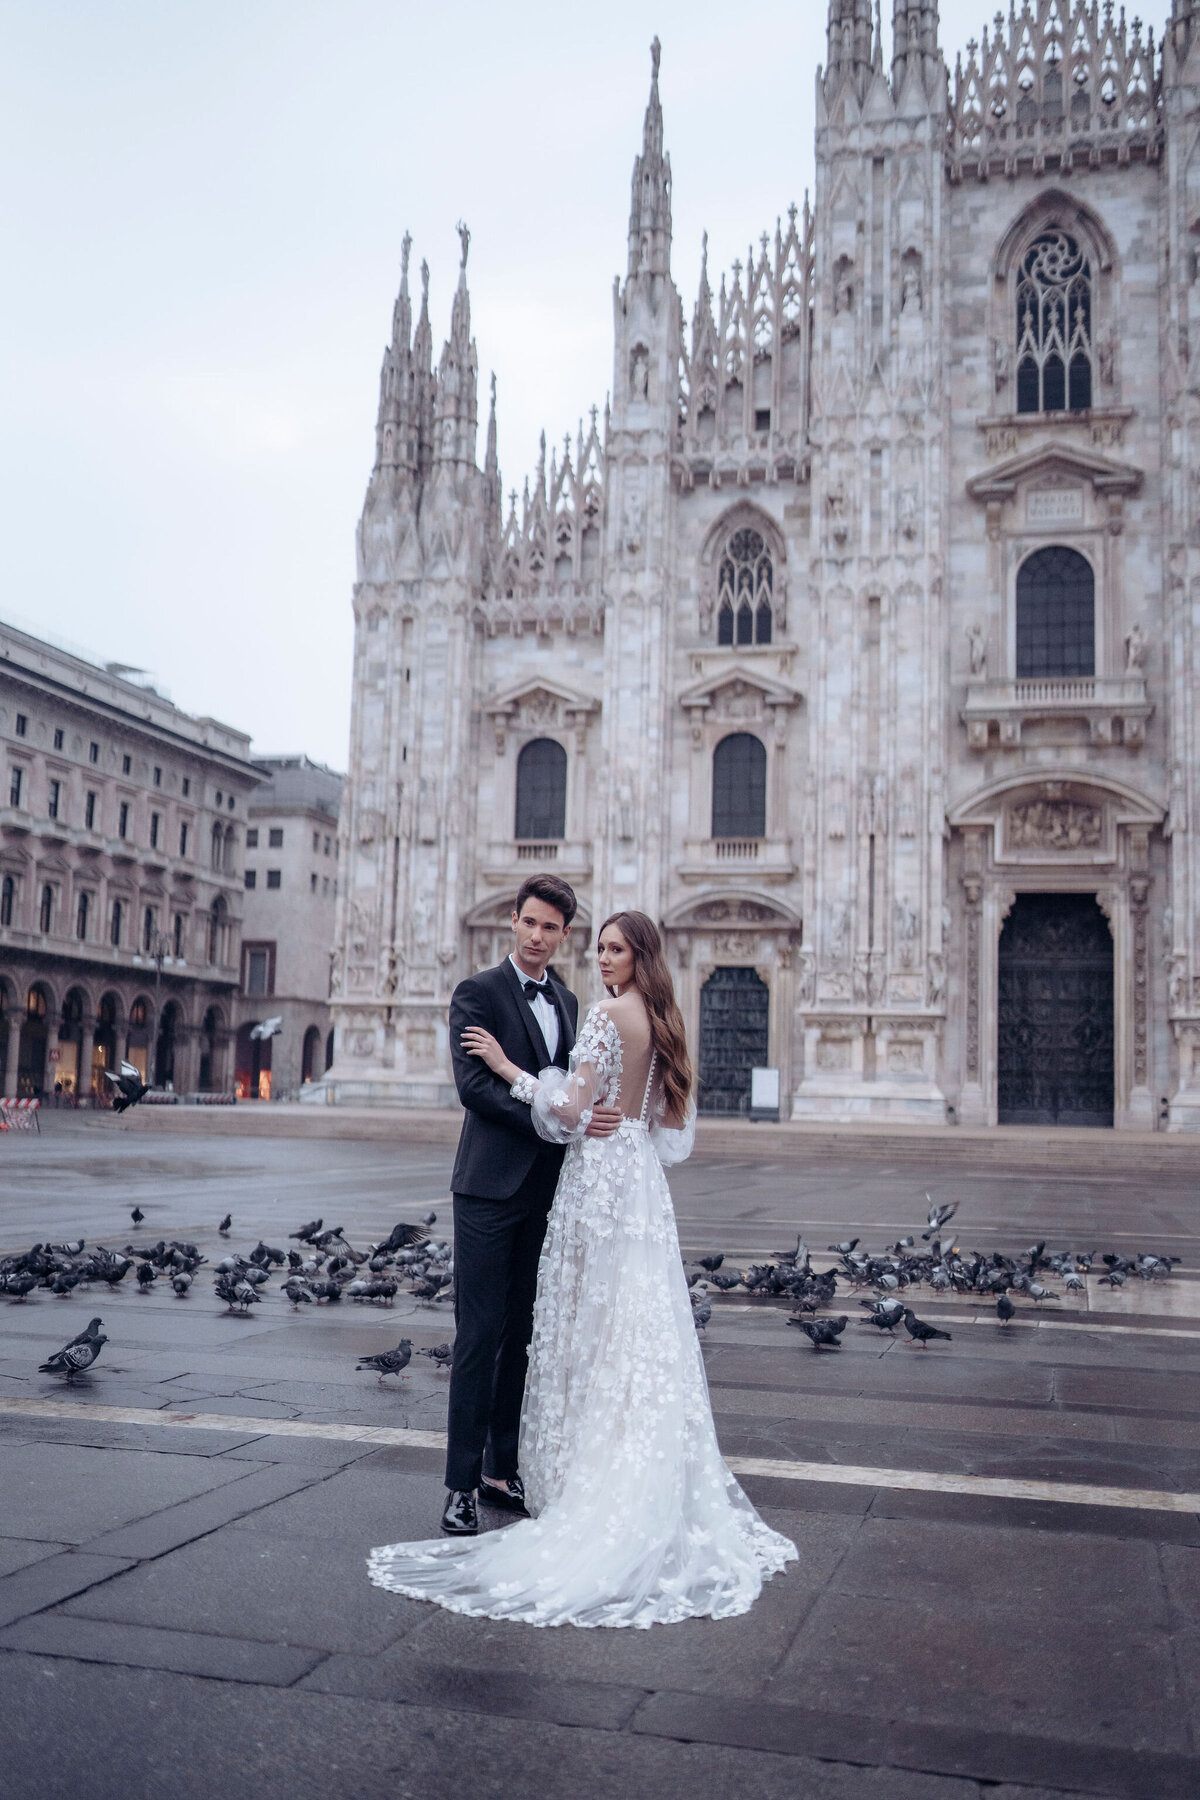 007-Milan-Duomo-Inspiration-Love-Story Elopement-Cinematic-Romance-Destination-Wedding-Editorial-Luxury-Fine-Art-Lisa-Vigliotta-Photography